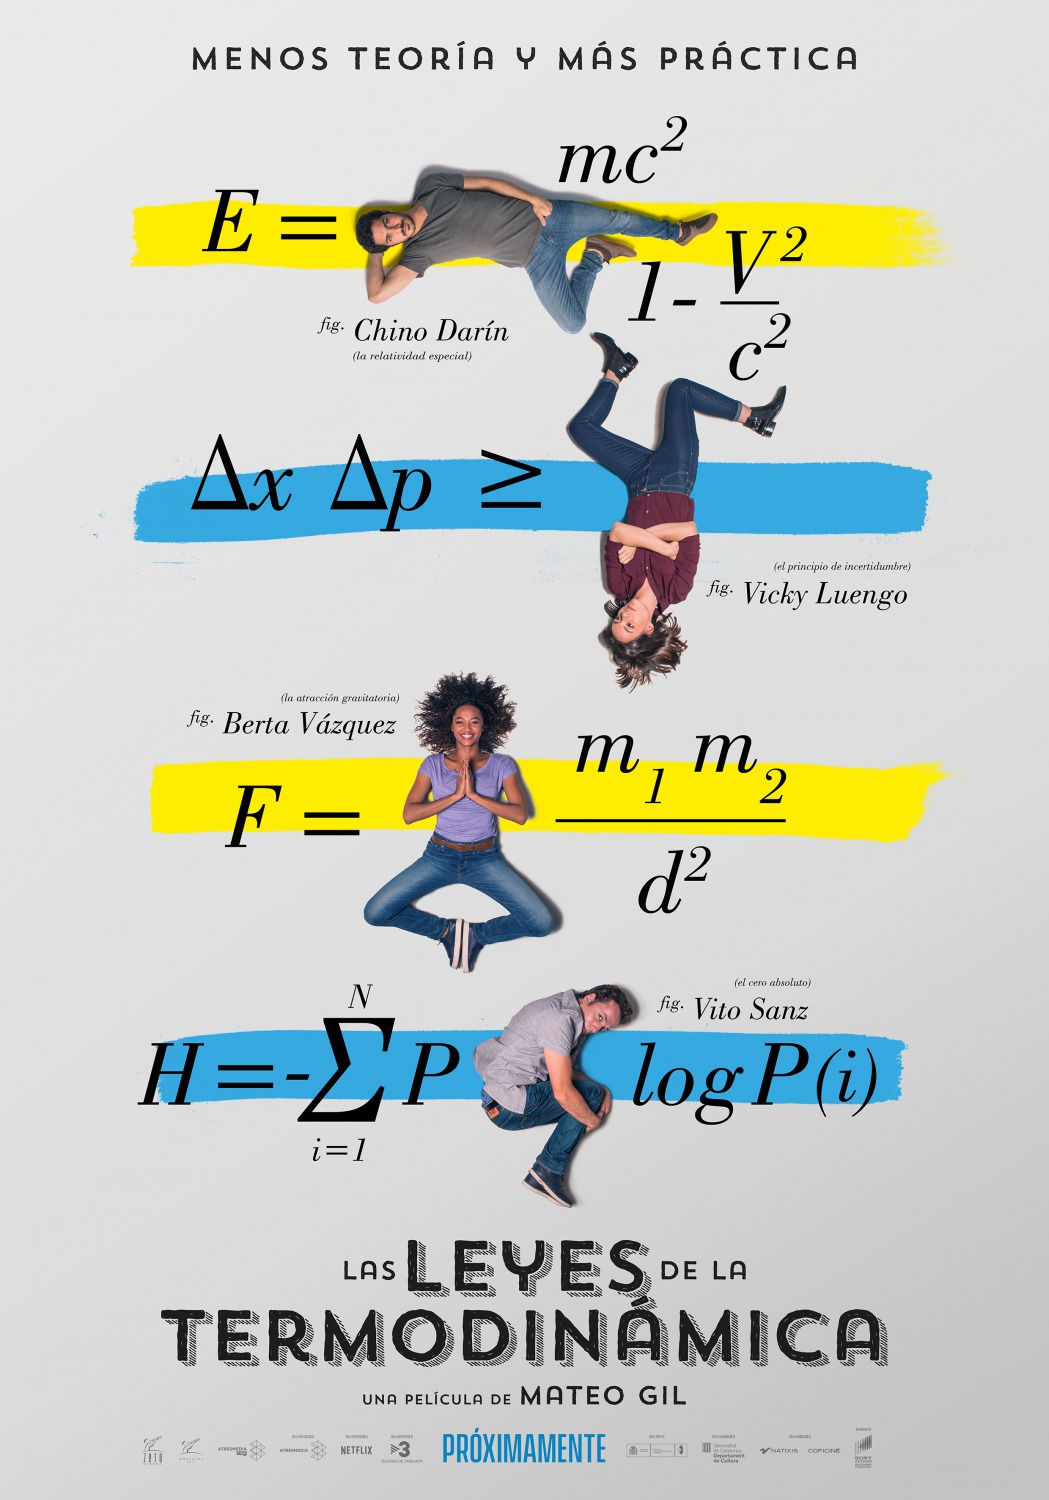 Extra Large Movie Poster Image for Las leyes de la termodinámica (#1 of 6)